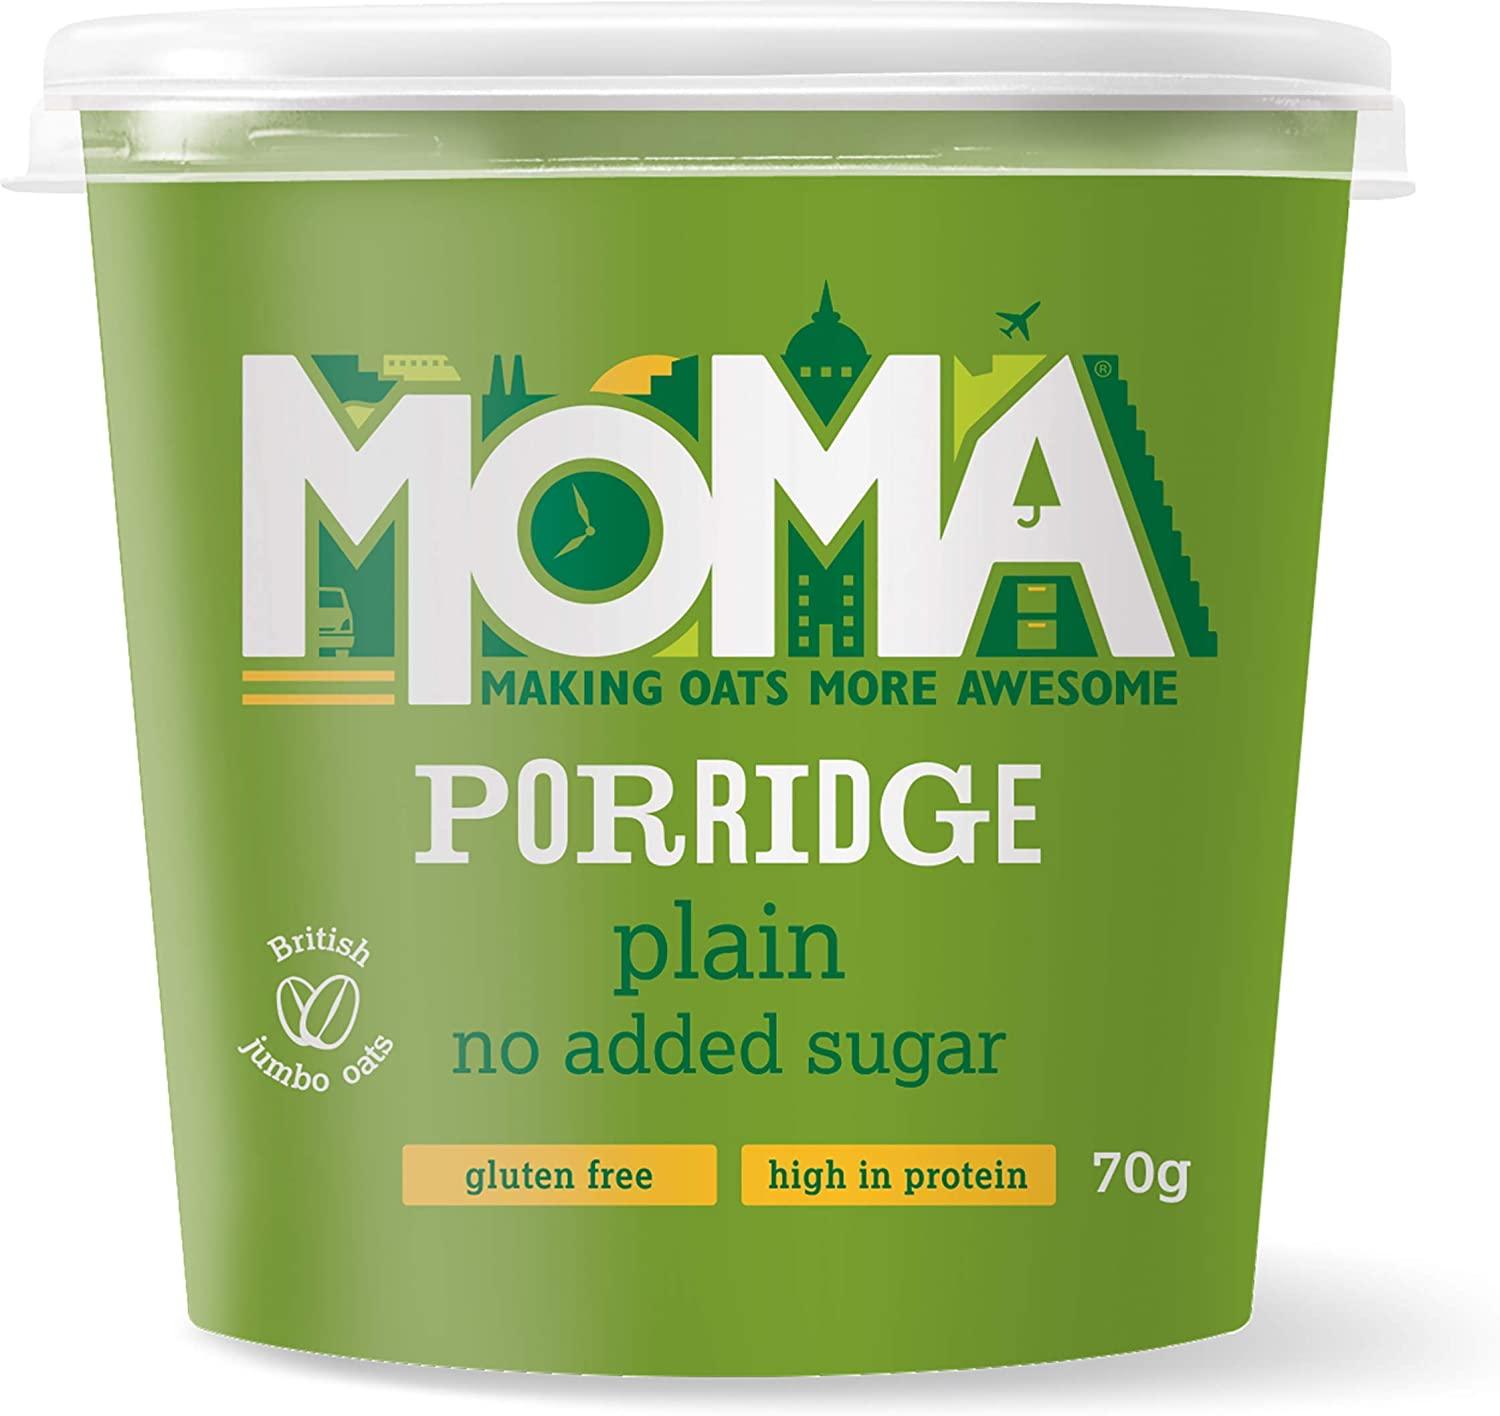 MOMA Instant Porridge Pots PLAIN - Pack of 12 (Gluten Free) - Vending Superstore